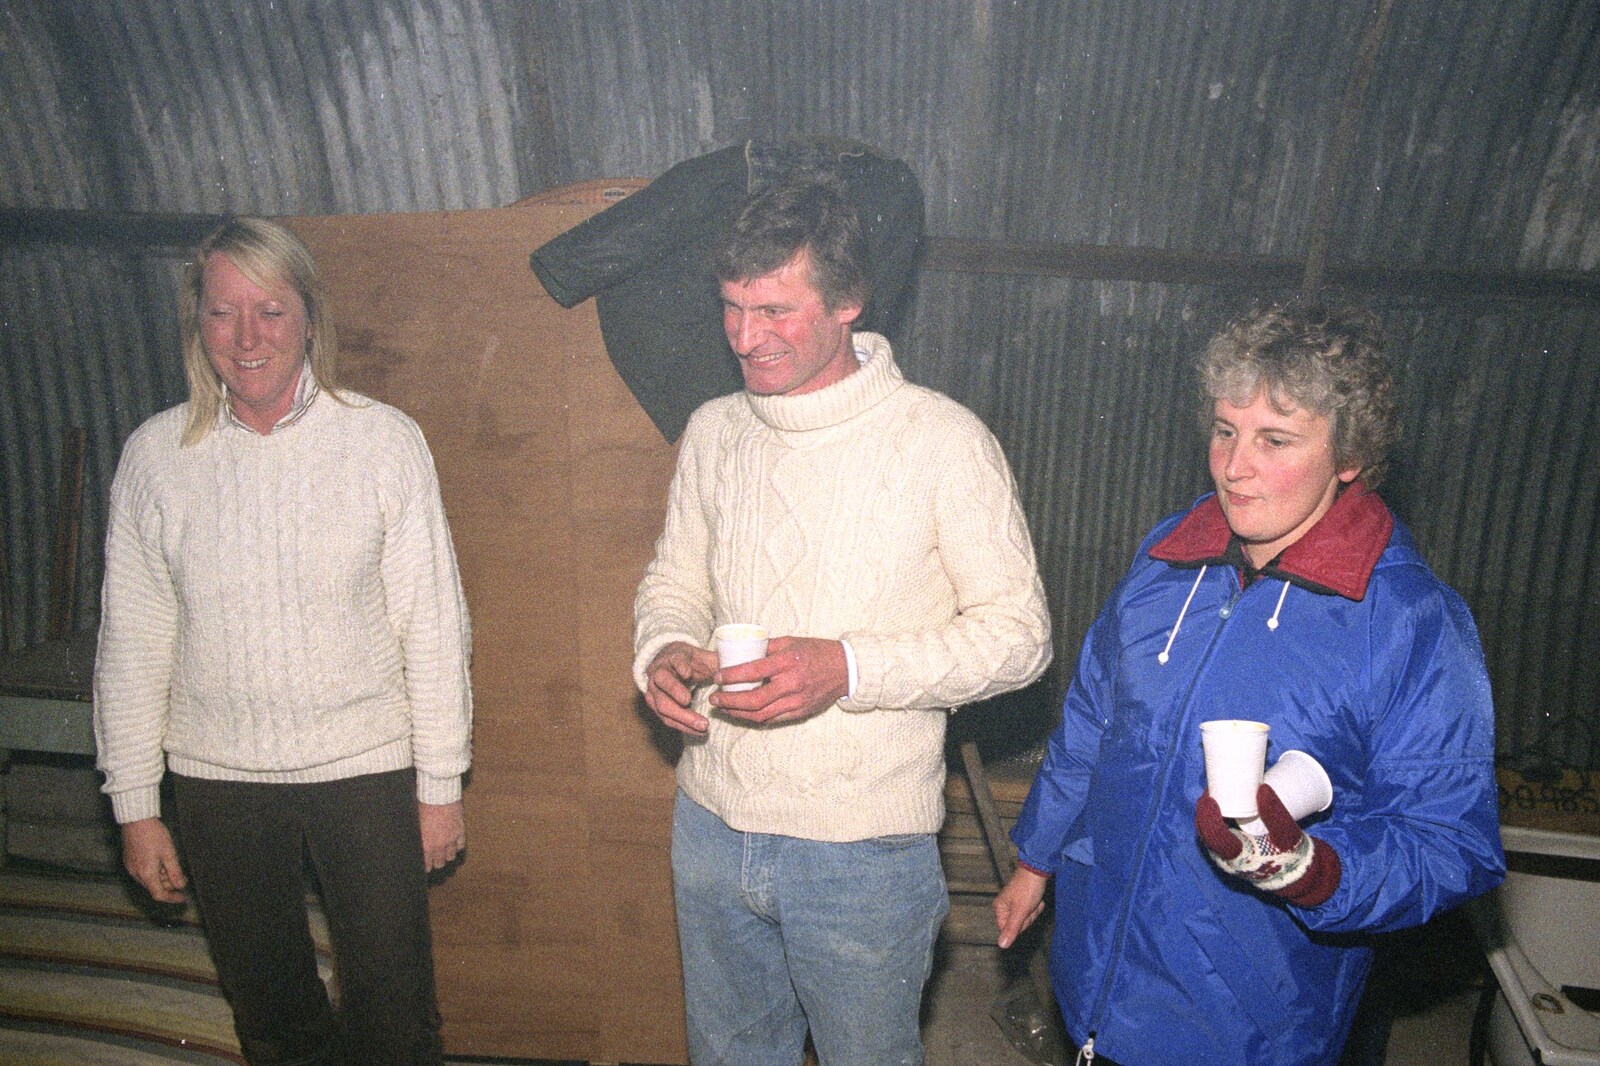 Sue, Geoff and Linda from Bonfire Night, Stuston, Suffolk - 5th November 1990